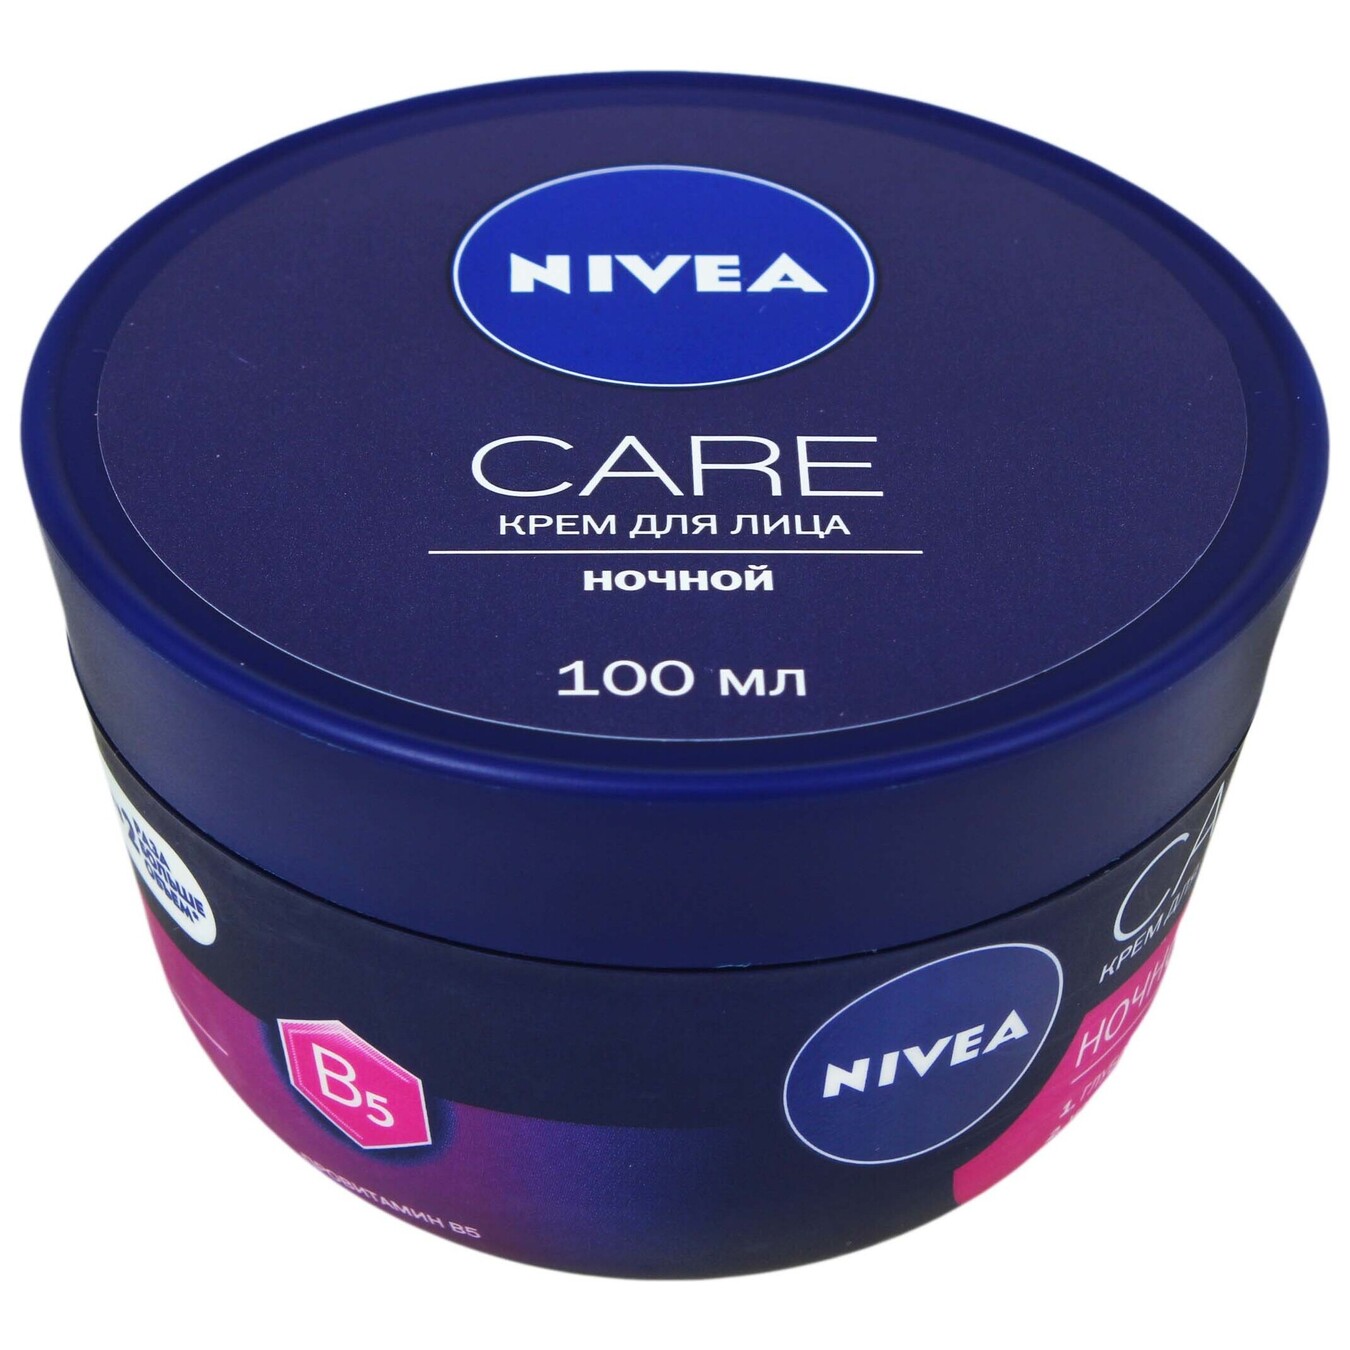 NIVEA Care night face cream 100 ml 2